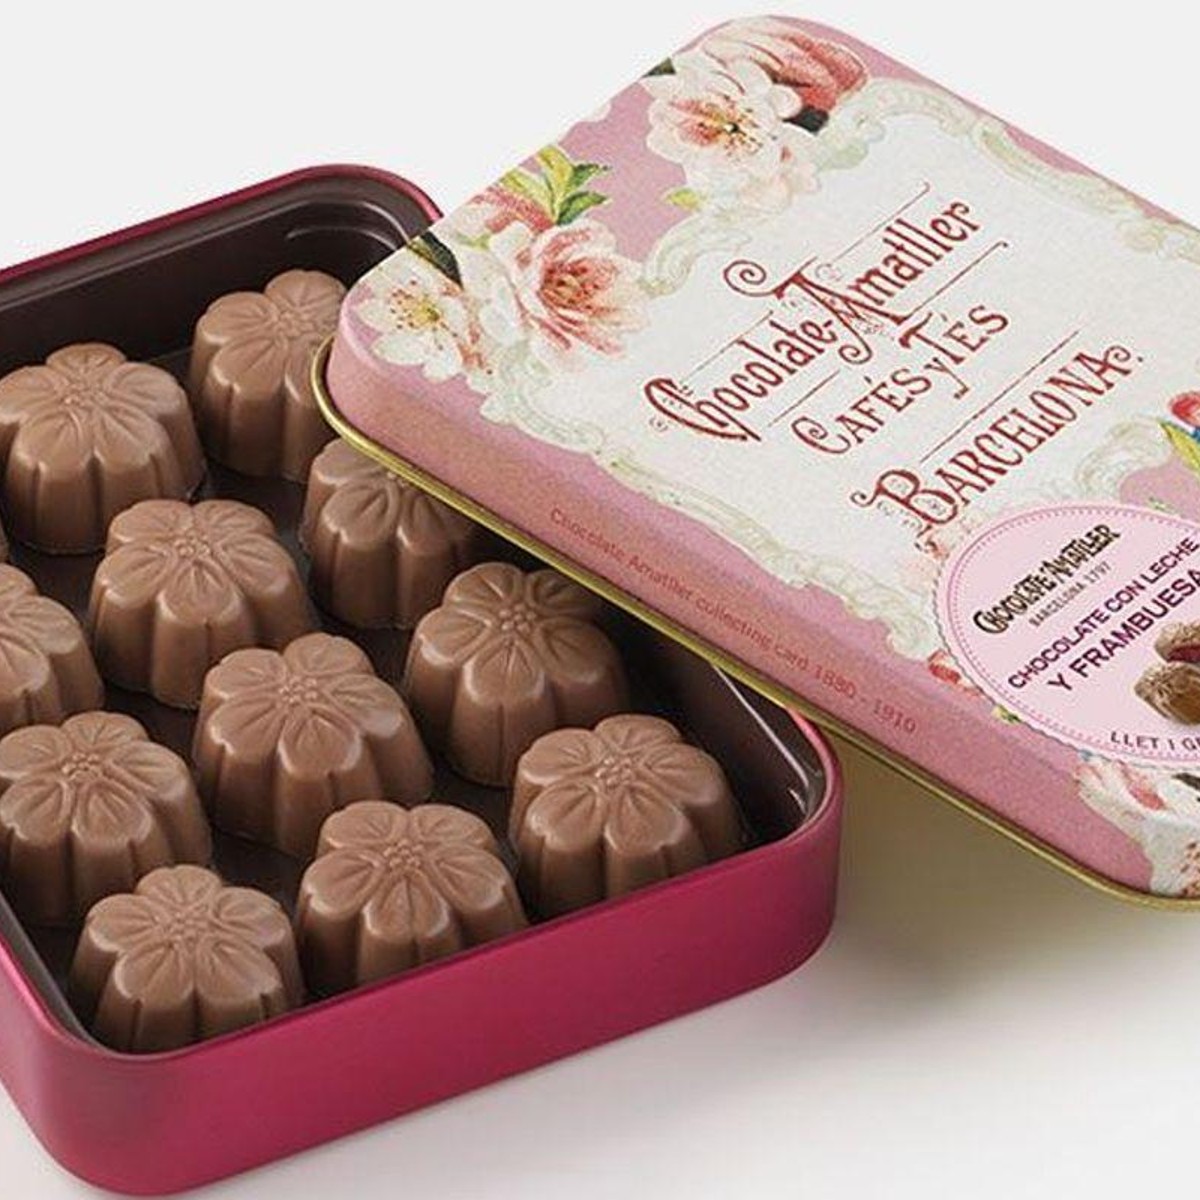 Grand Ferrero Rocher Premium Dark Chocolate Hazelnut Luxury Chocolate  Holiday Gift, 4.4 oz - Fry's Food Stores